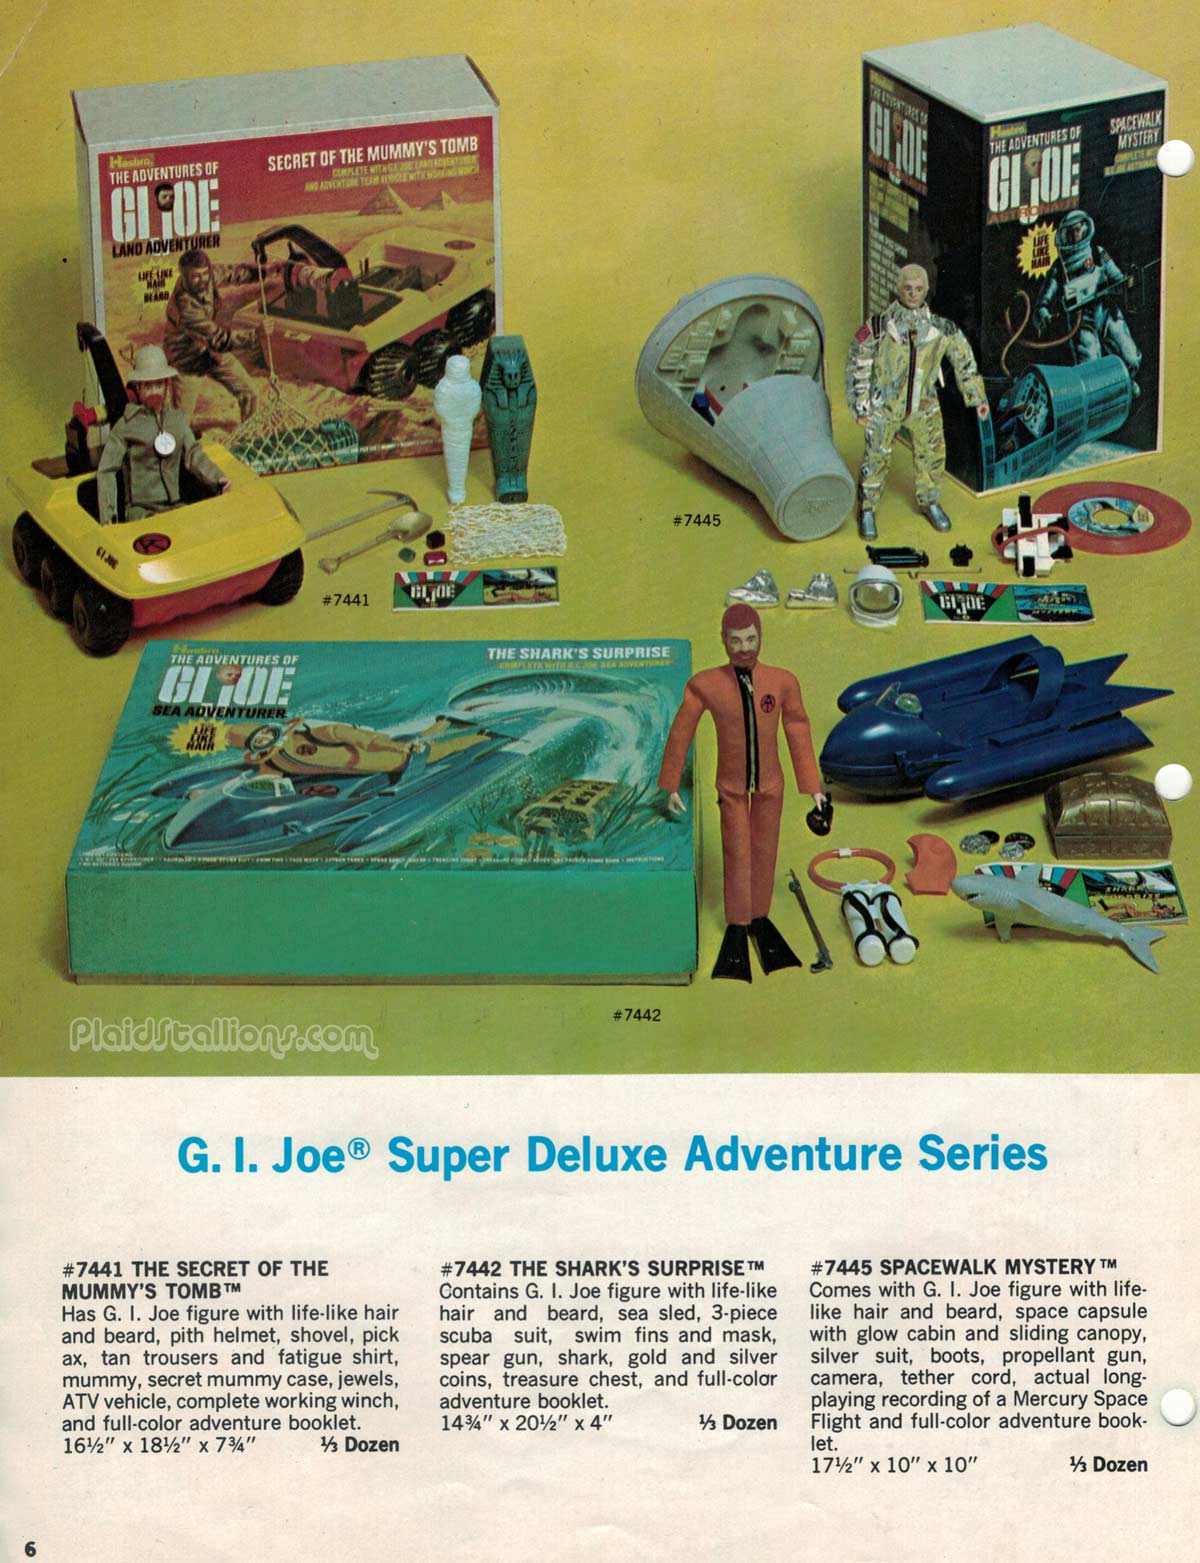 Hasbro 1971 GI Joe catalog